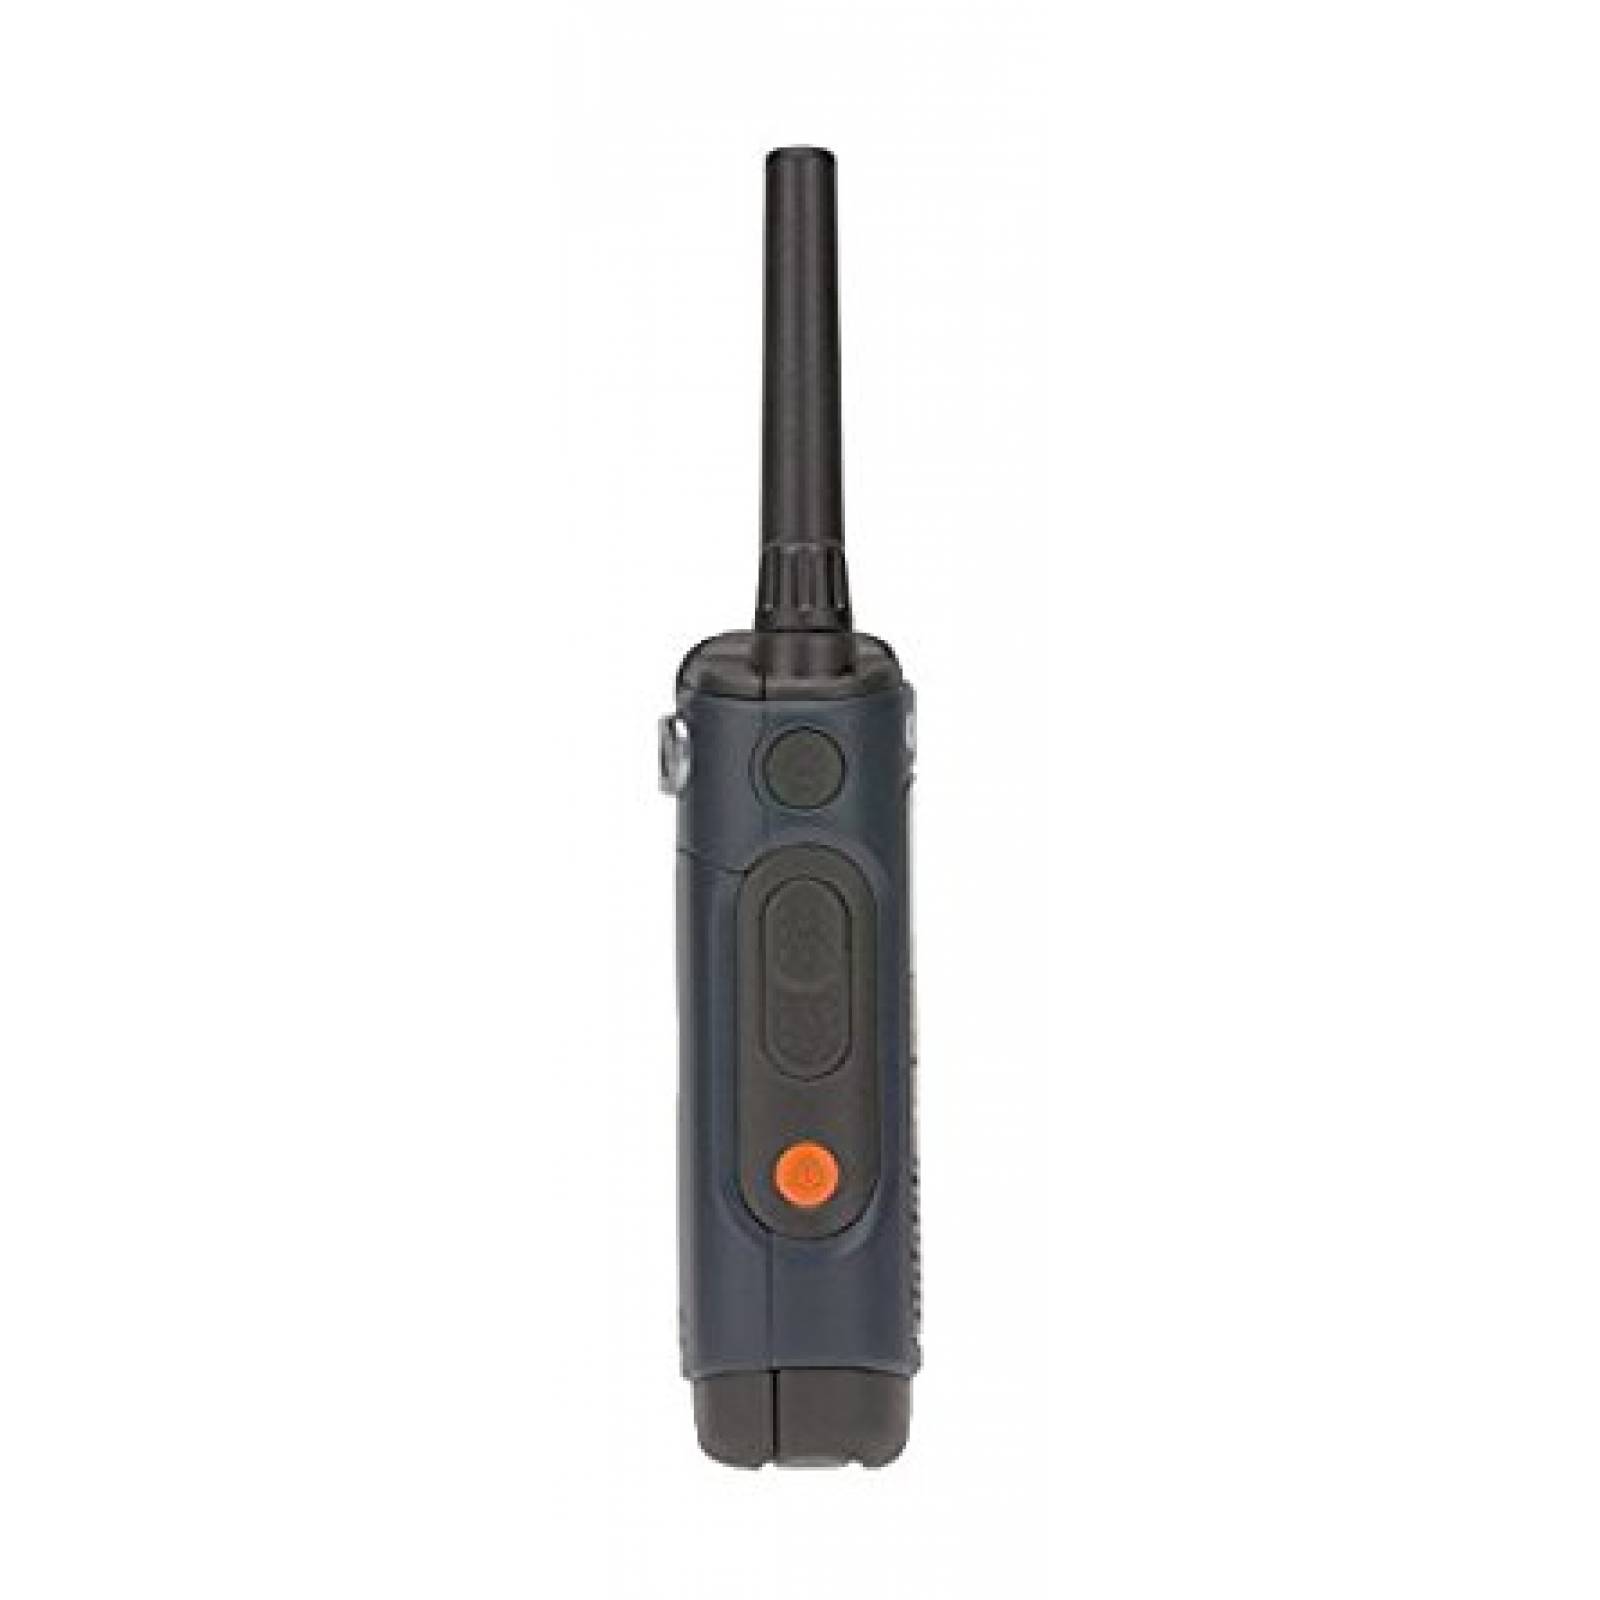 Motorola Talkabout T460 Radio dos vías recargable par  -Azul